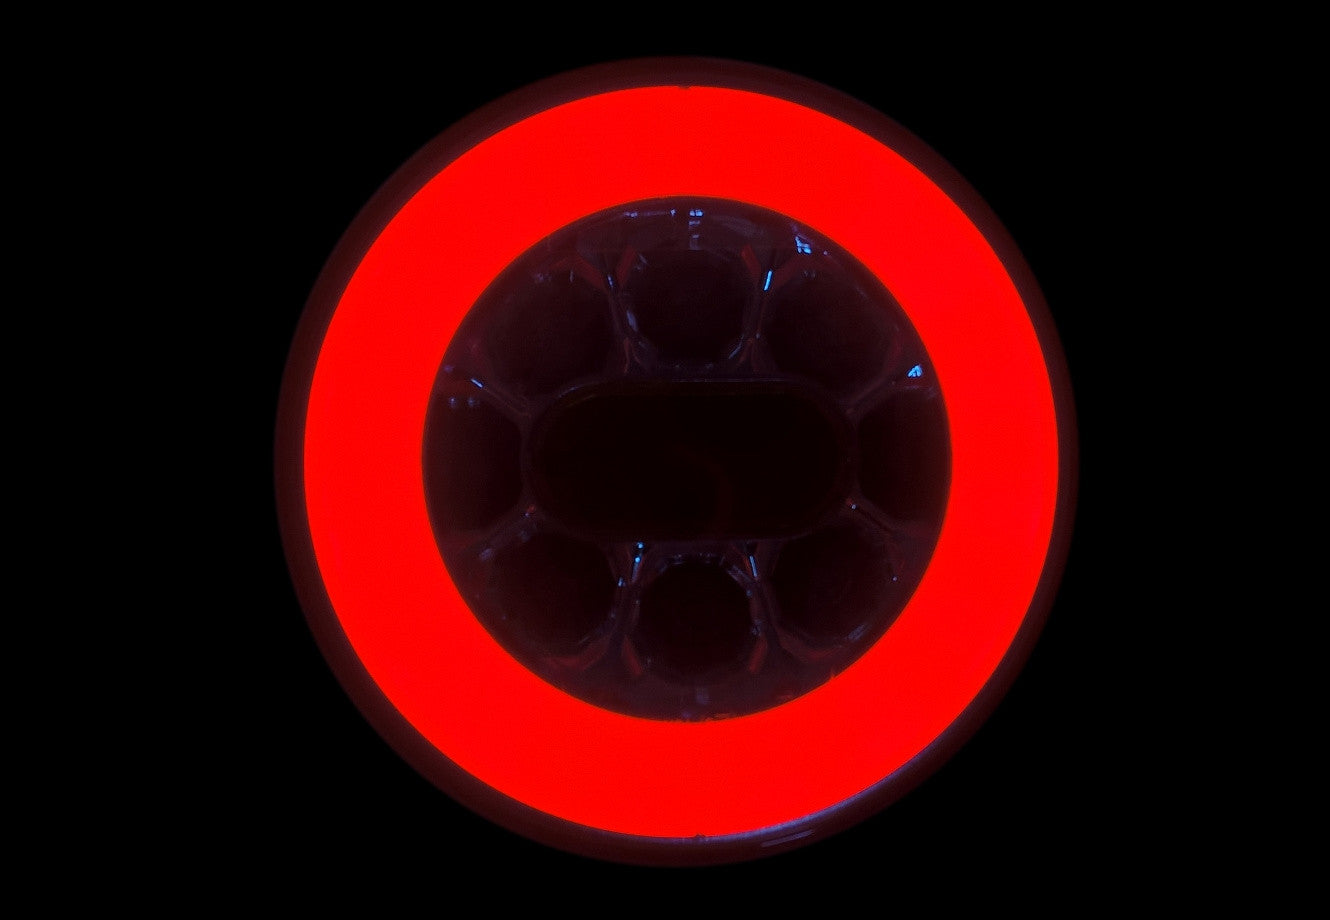 LED-Nebelscheinwerfer für Anhänger mit Neoneffekt – spo-cs-disabled – spo-default – spo-disabled – spo-notify-me-disabled